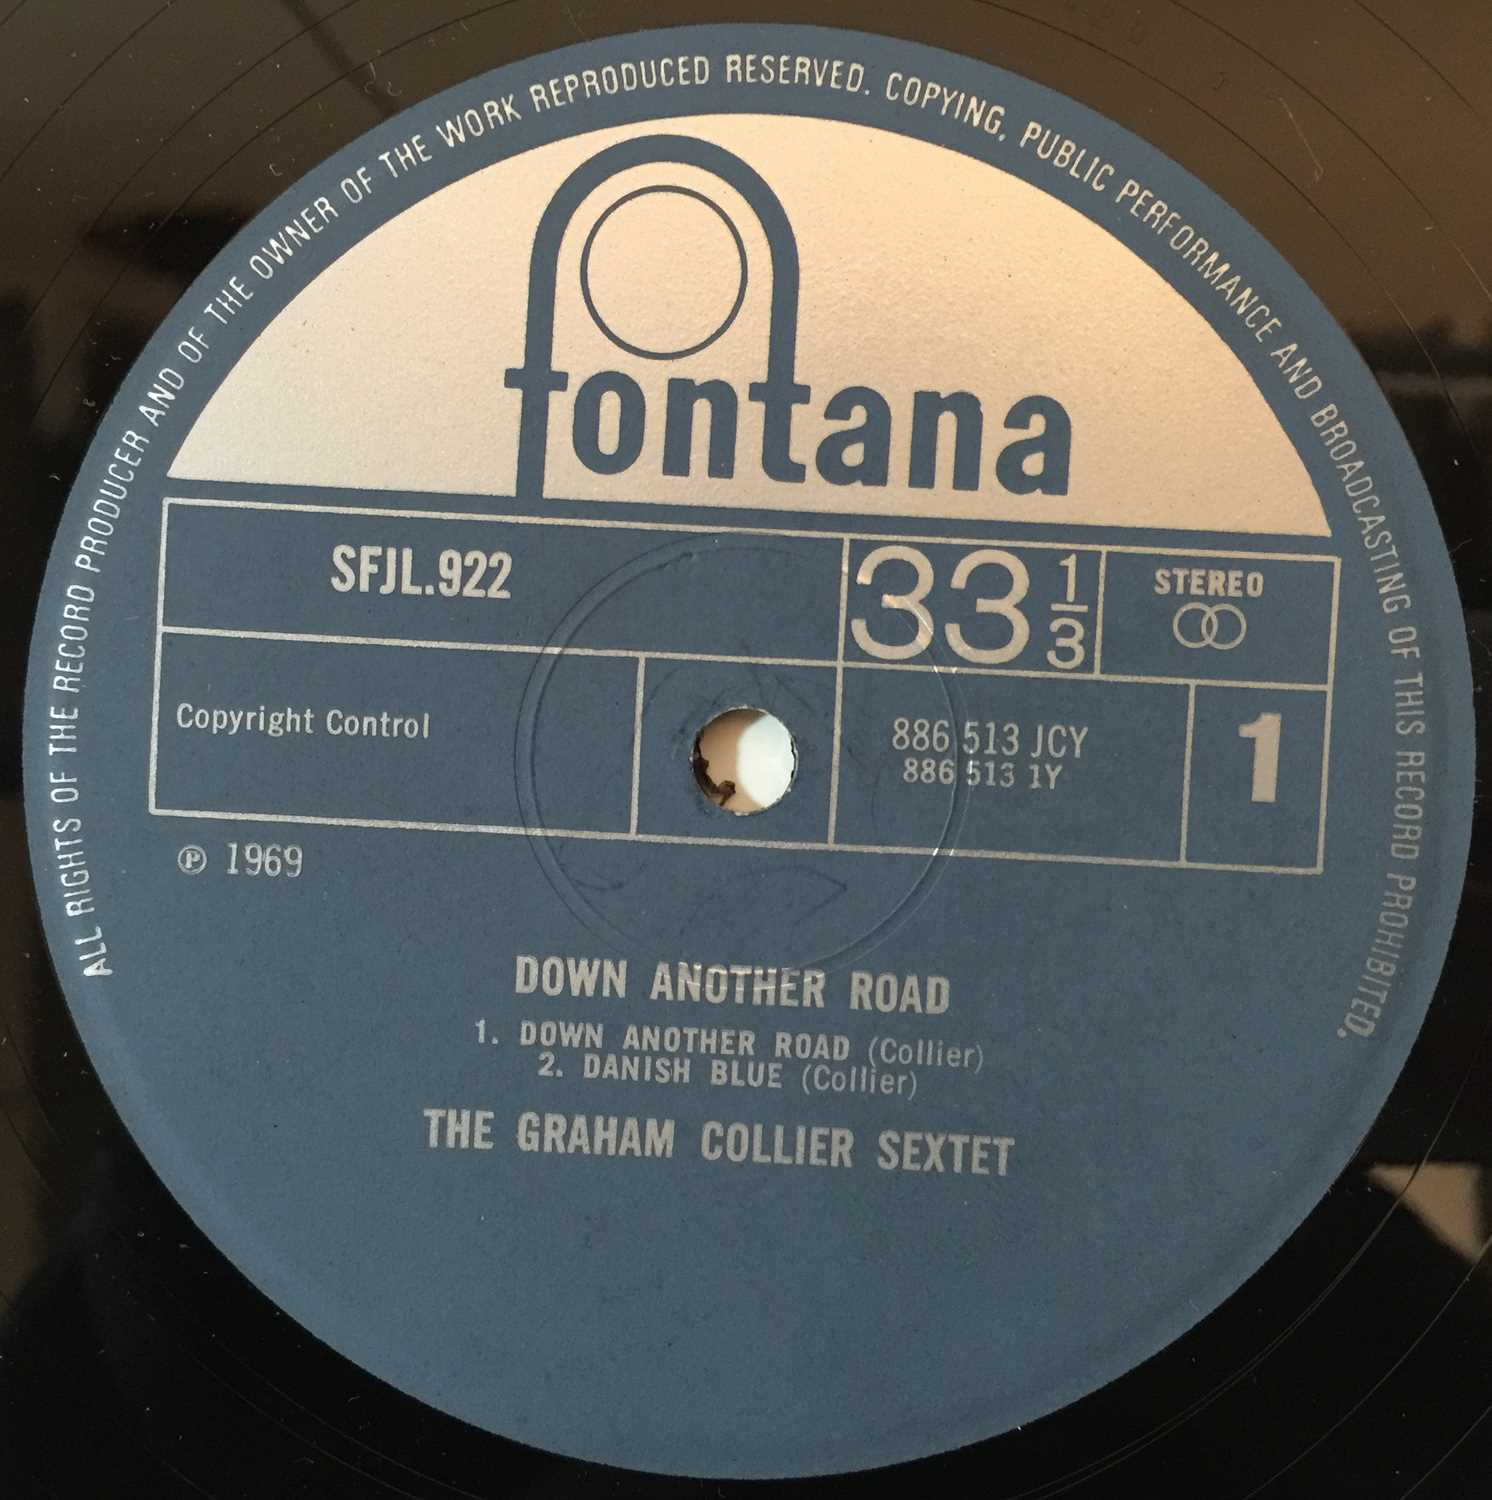 Graham Collier Sextet - Down Another Road LP (Original UK Release - Fontana SFJL 922) - Image 3 of 4